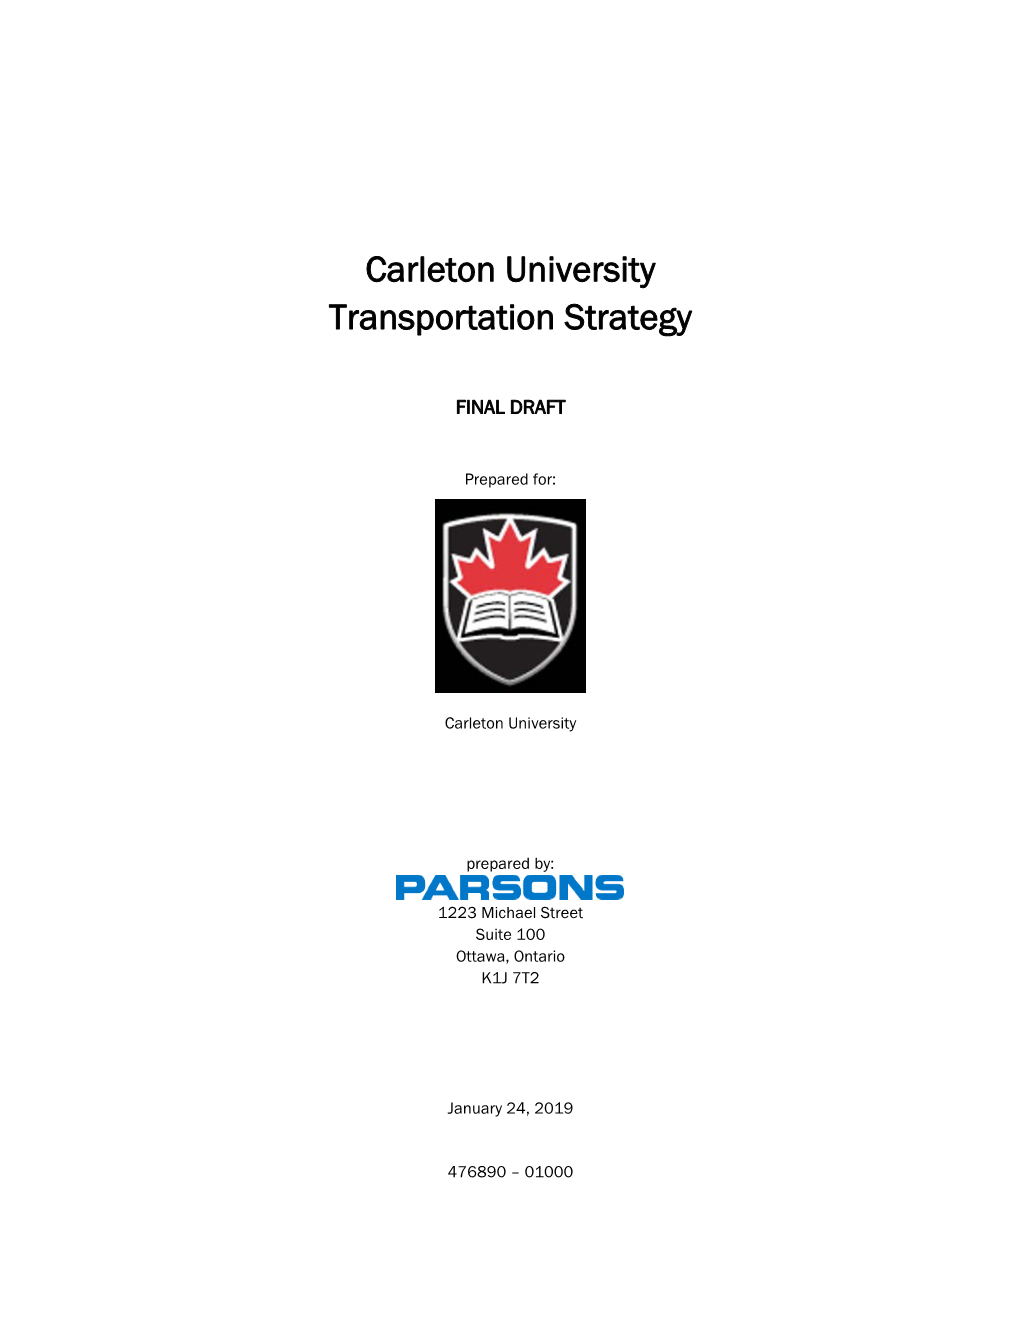 Carleton University Transportation Strategy